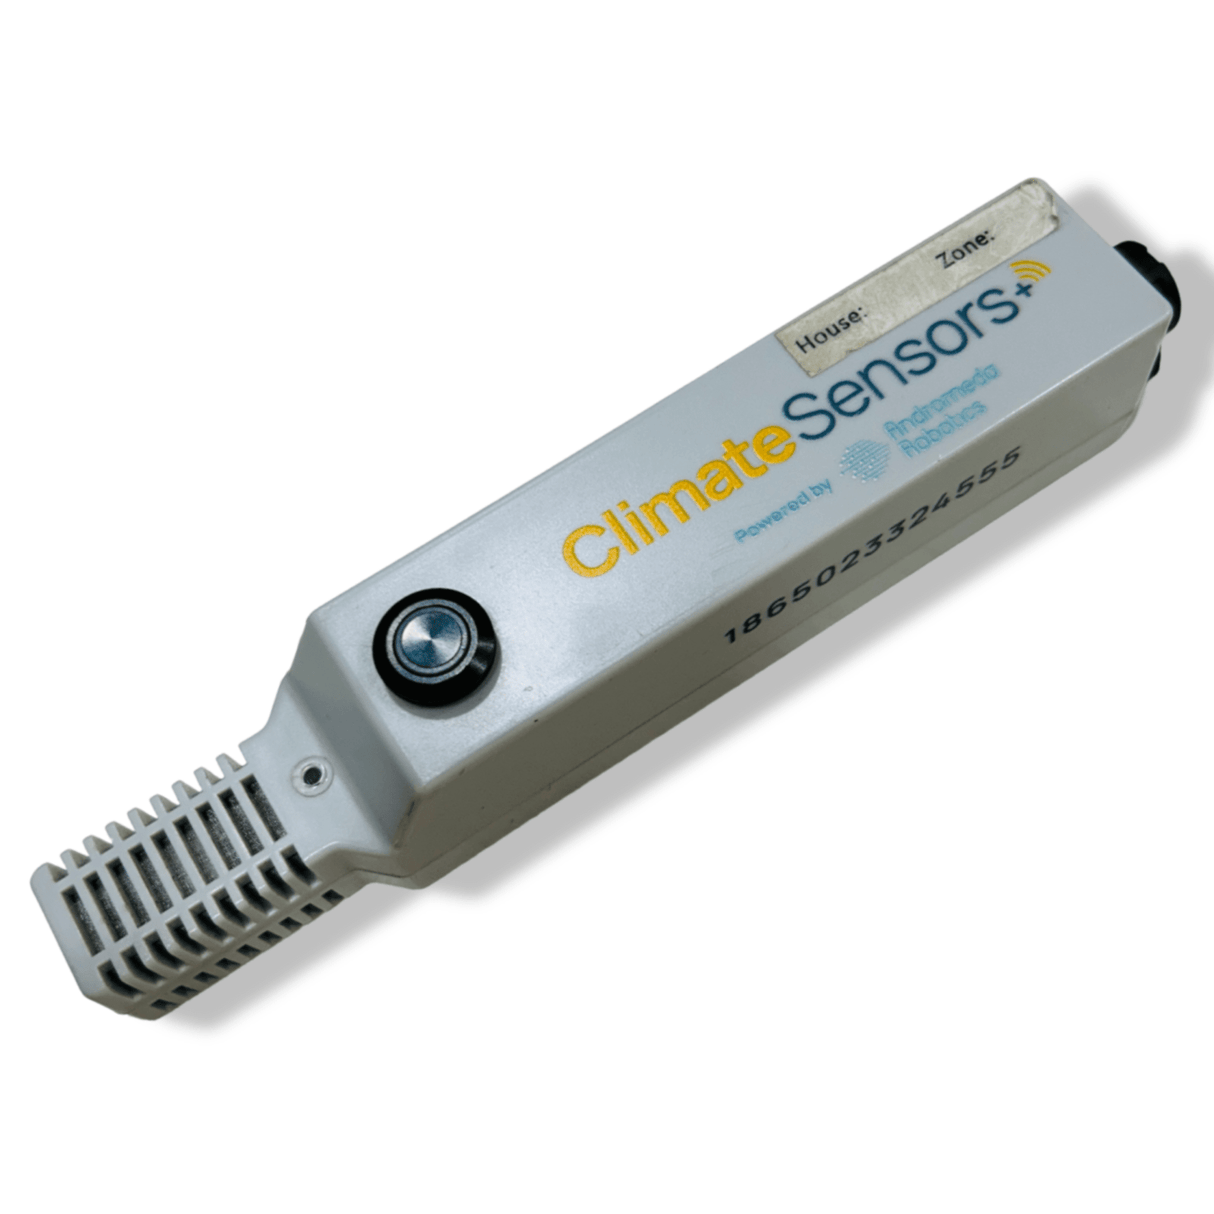 Climate Sensor Stick - 5 Sensors in 1 Device